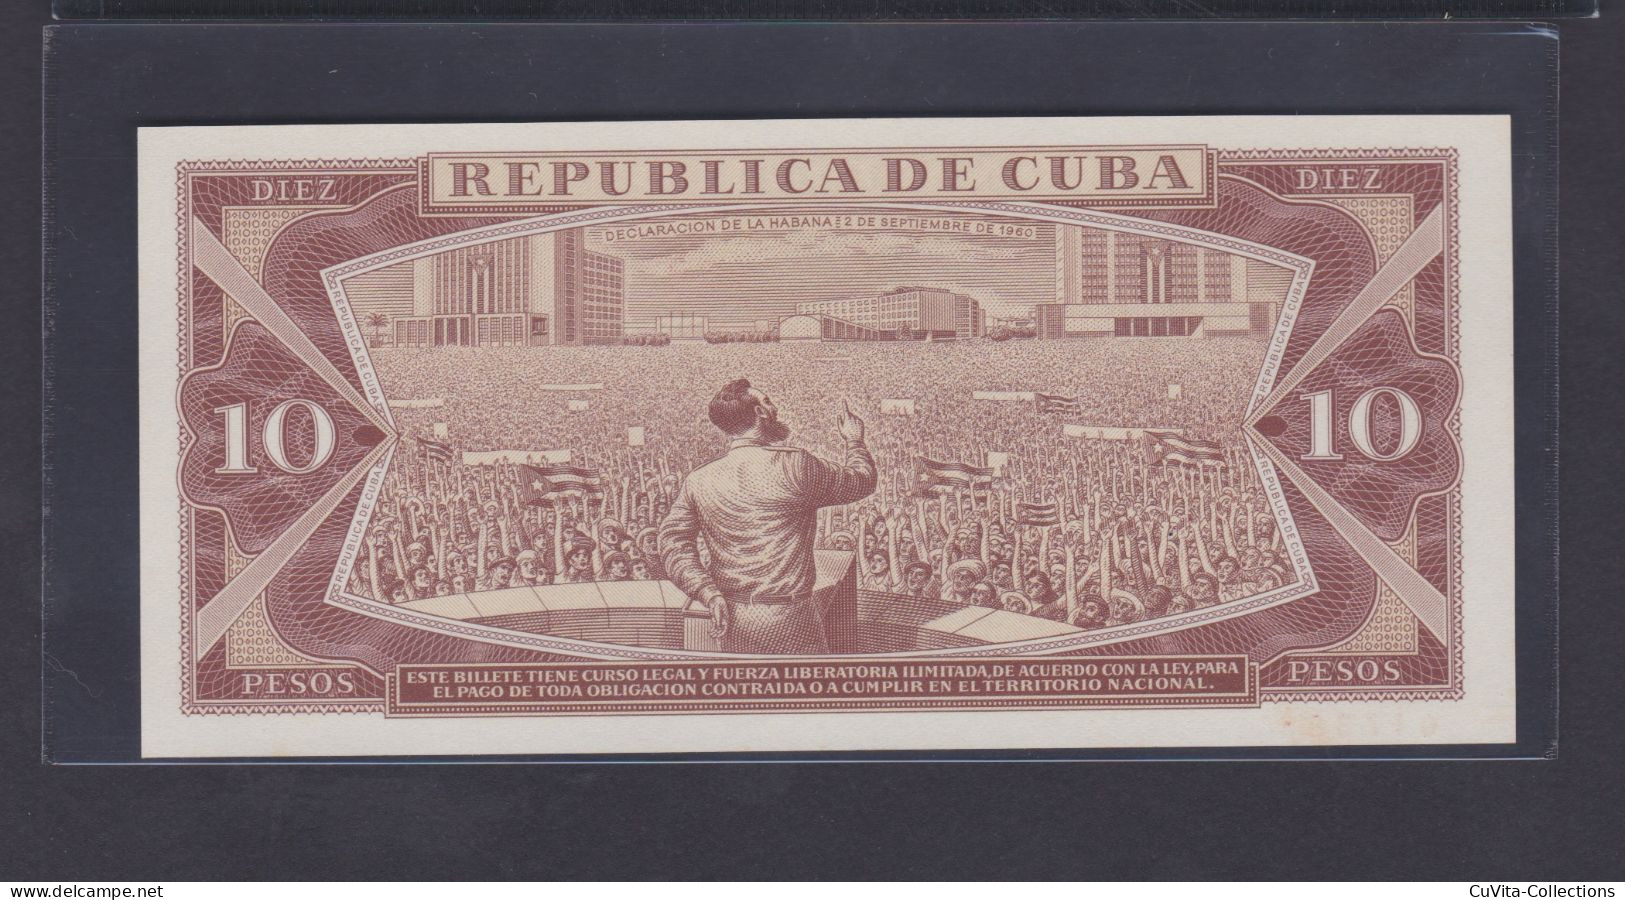 10 PESOS 1967 UNC / SC SPECIMEN - Cuba